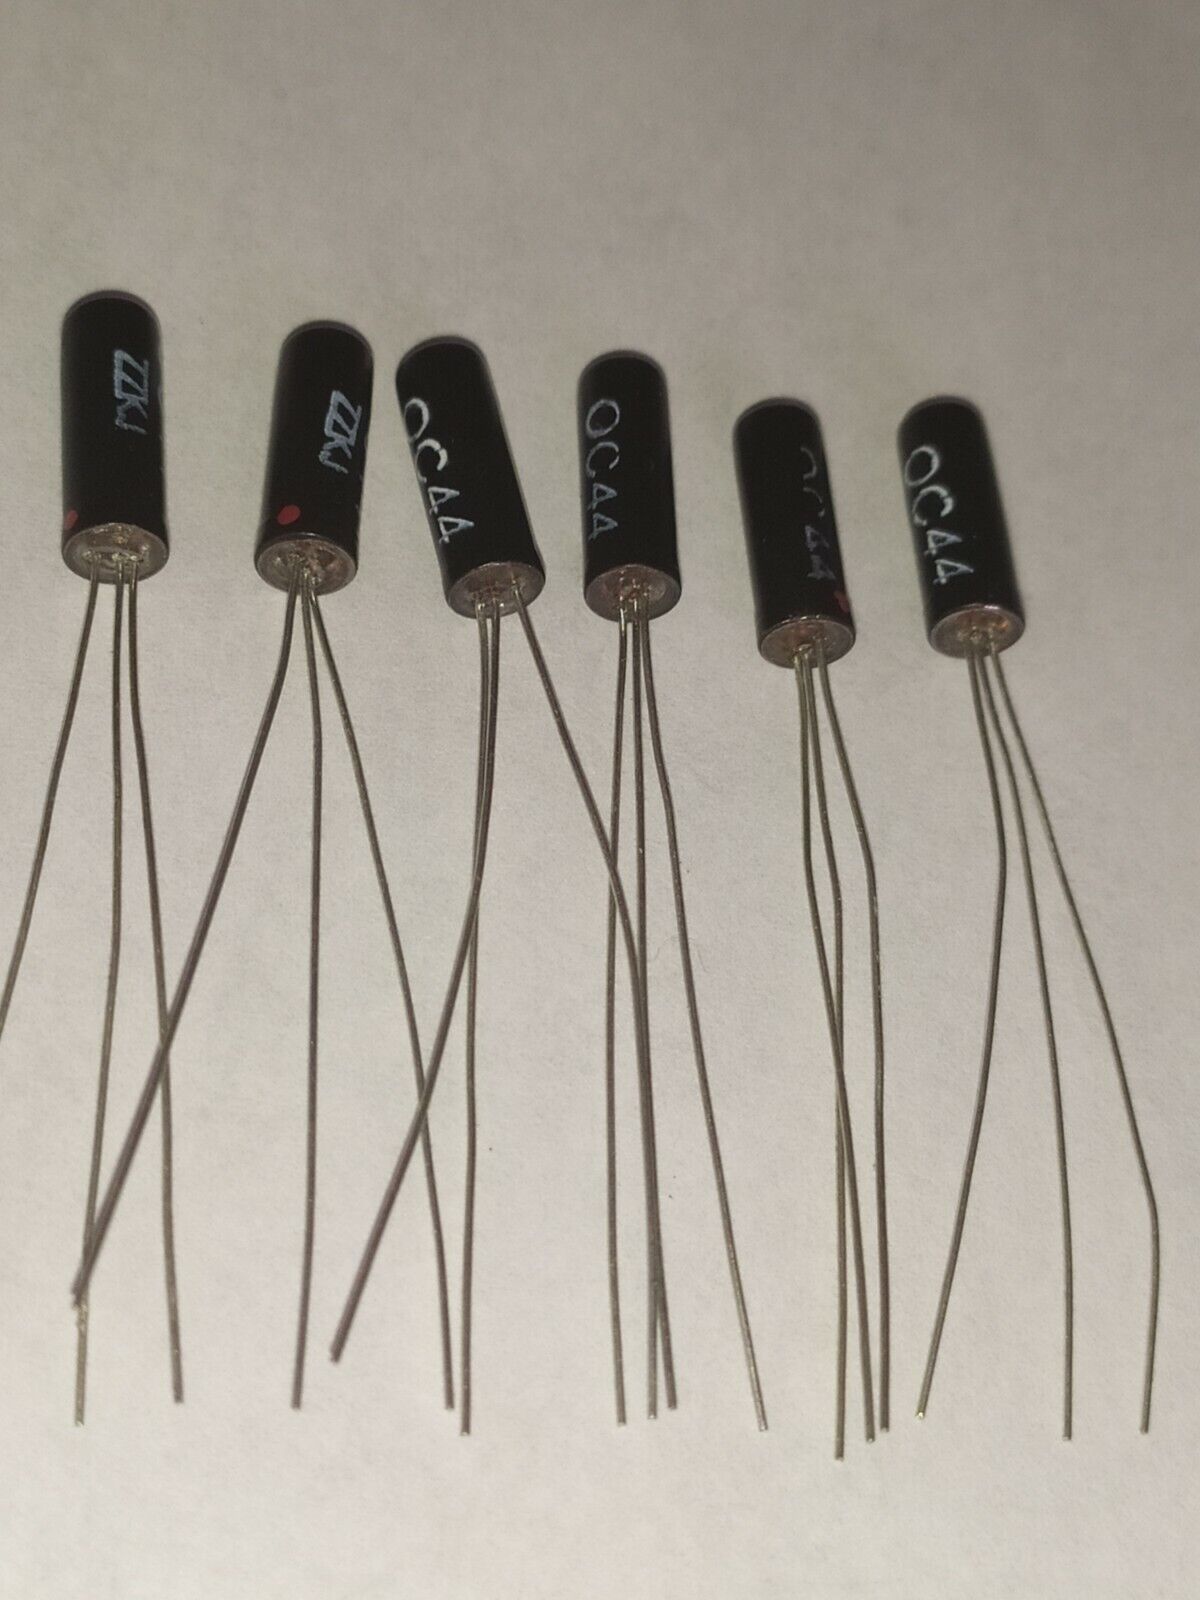 OC44  Lot 6 pcs transistors Germanium noir Fuzz HFE entre 40/150  price export  